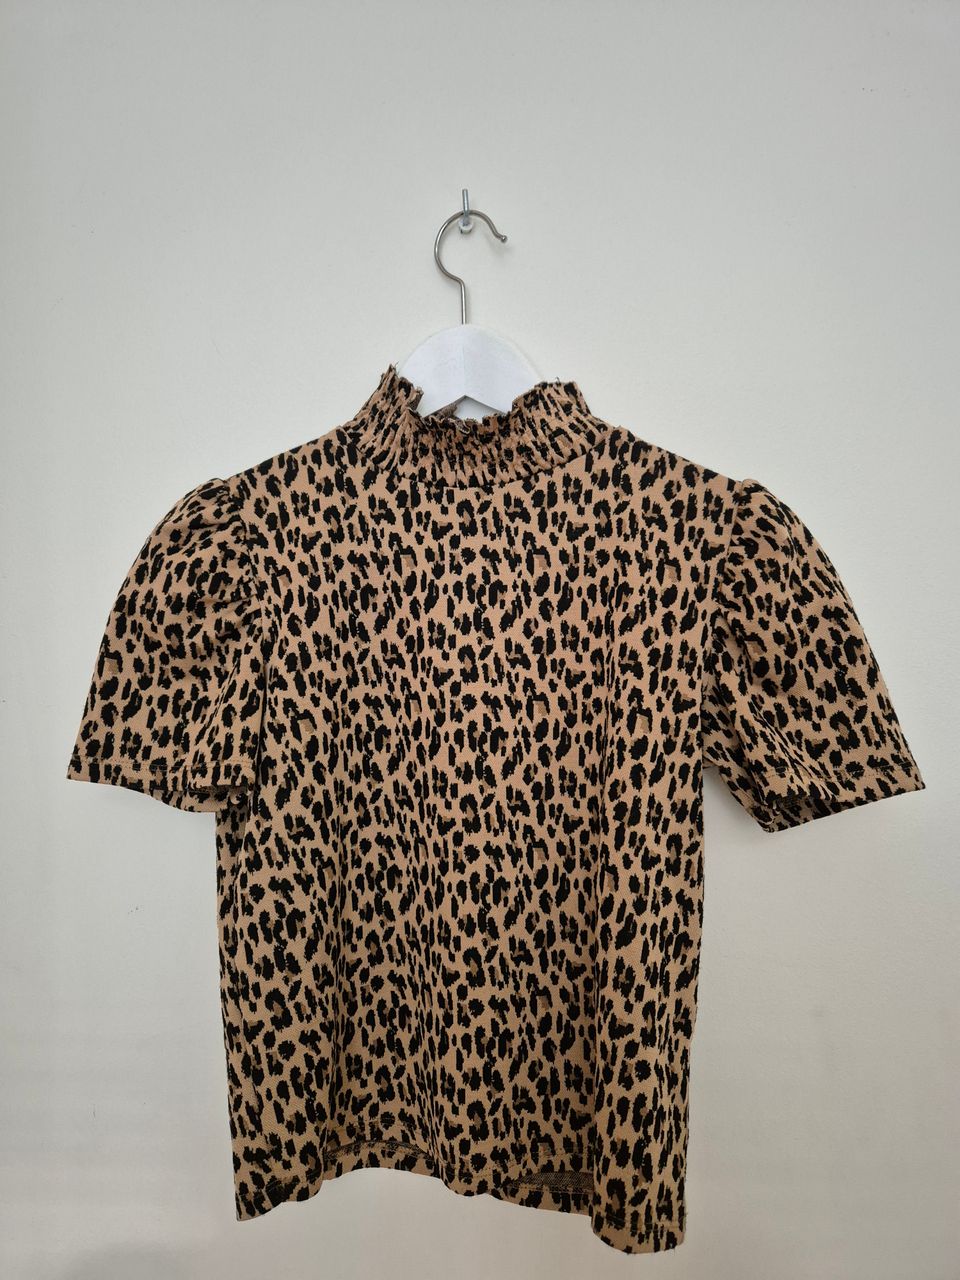 Zara leopardikuosinen t-paita, koko M